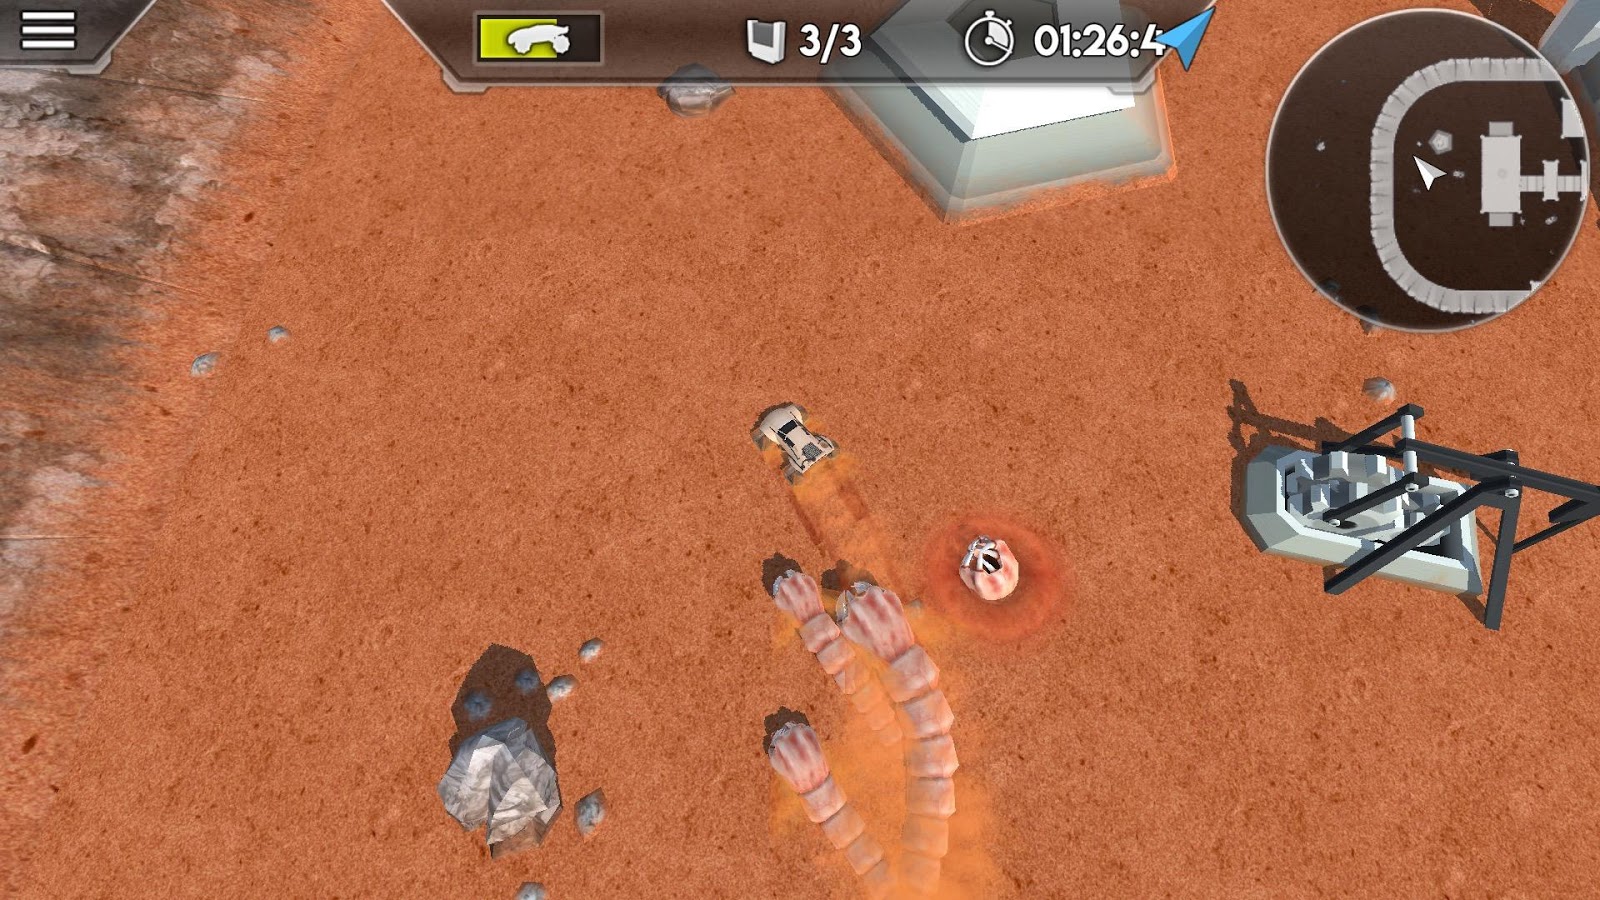 Desert worm game offline racing - Tutor Droid (Game)